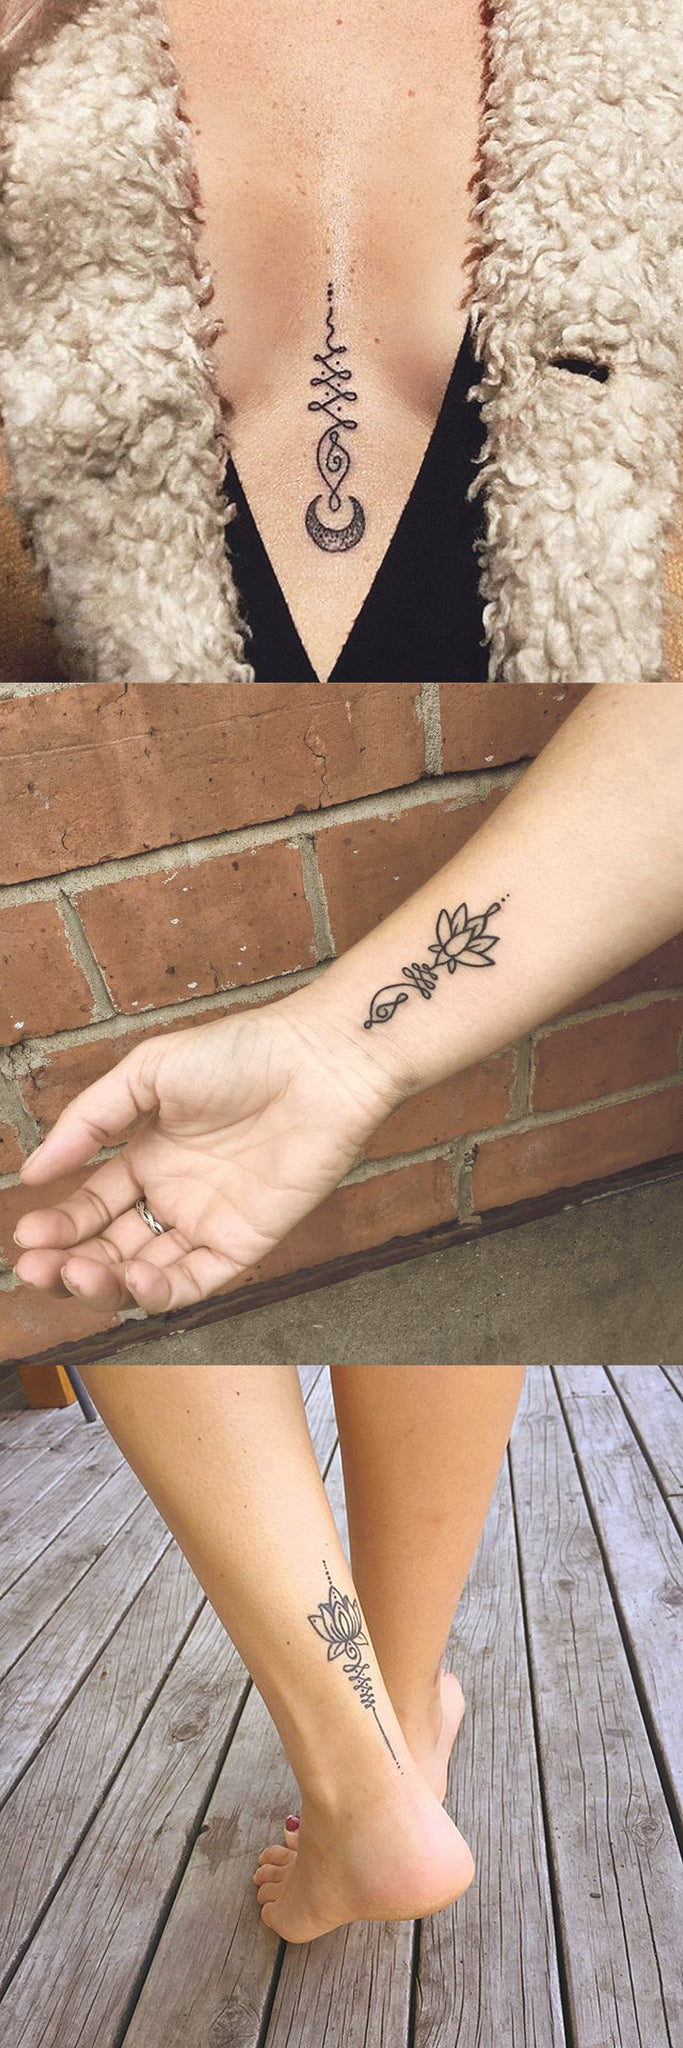 Unalome Lotus Simple Small Tattoo Ideas - Floral Flower Wrist Sternum Ankle Leg at MyBodiArt.com